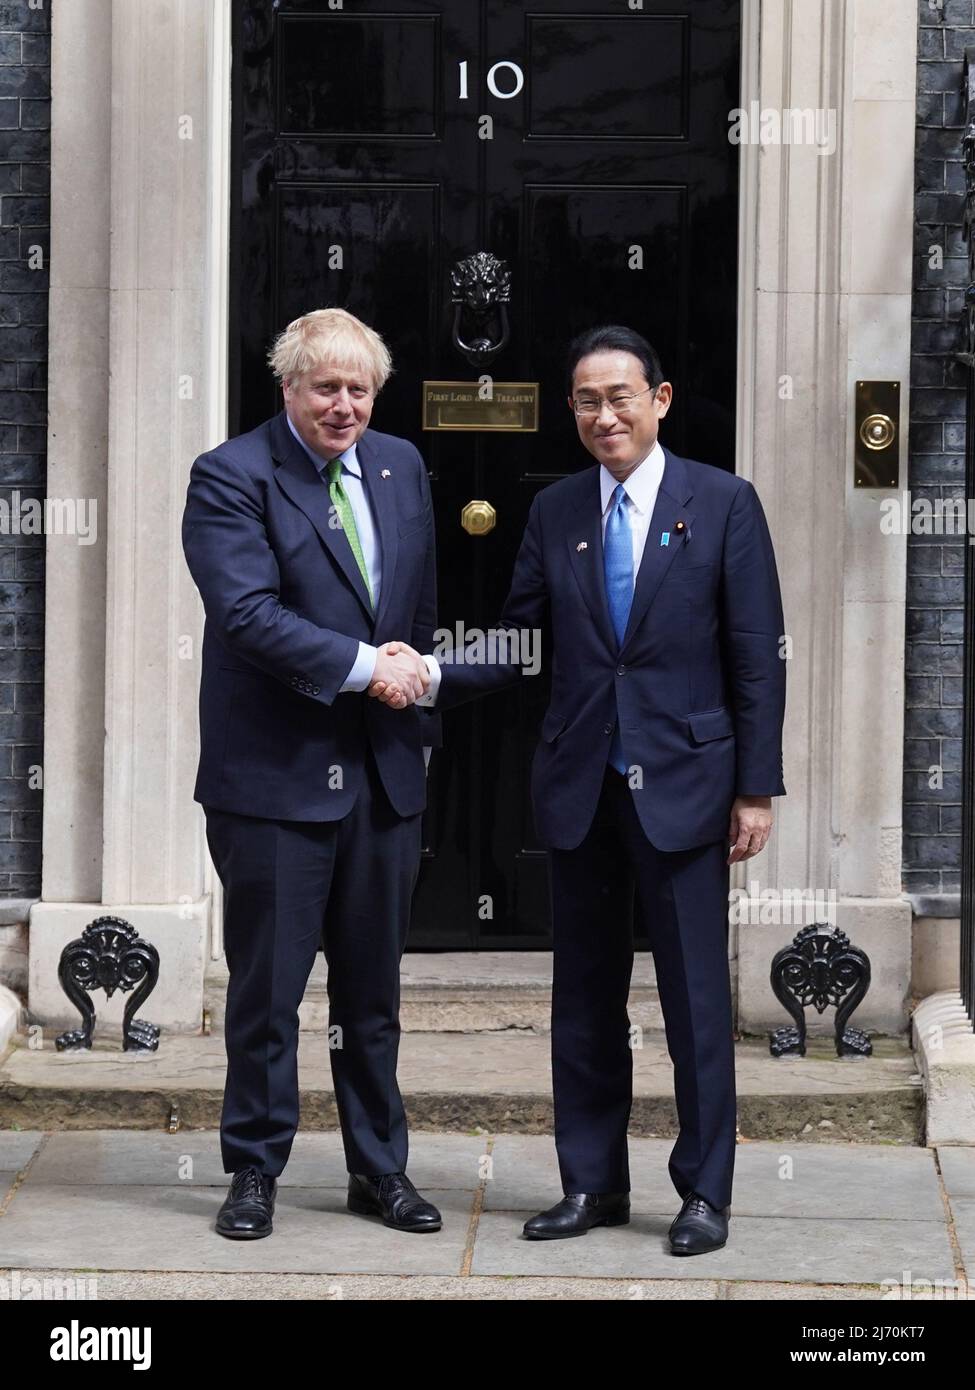 Premierminister Boris Johnson begrüßt den japanischen Premierminister Fumio Kishida in der Downing Street 10 in London. Bilddatum: Donnerstag, 5. Mai 2022. Stockfoto